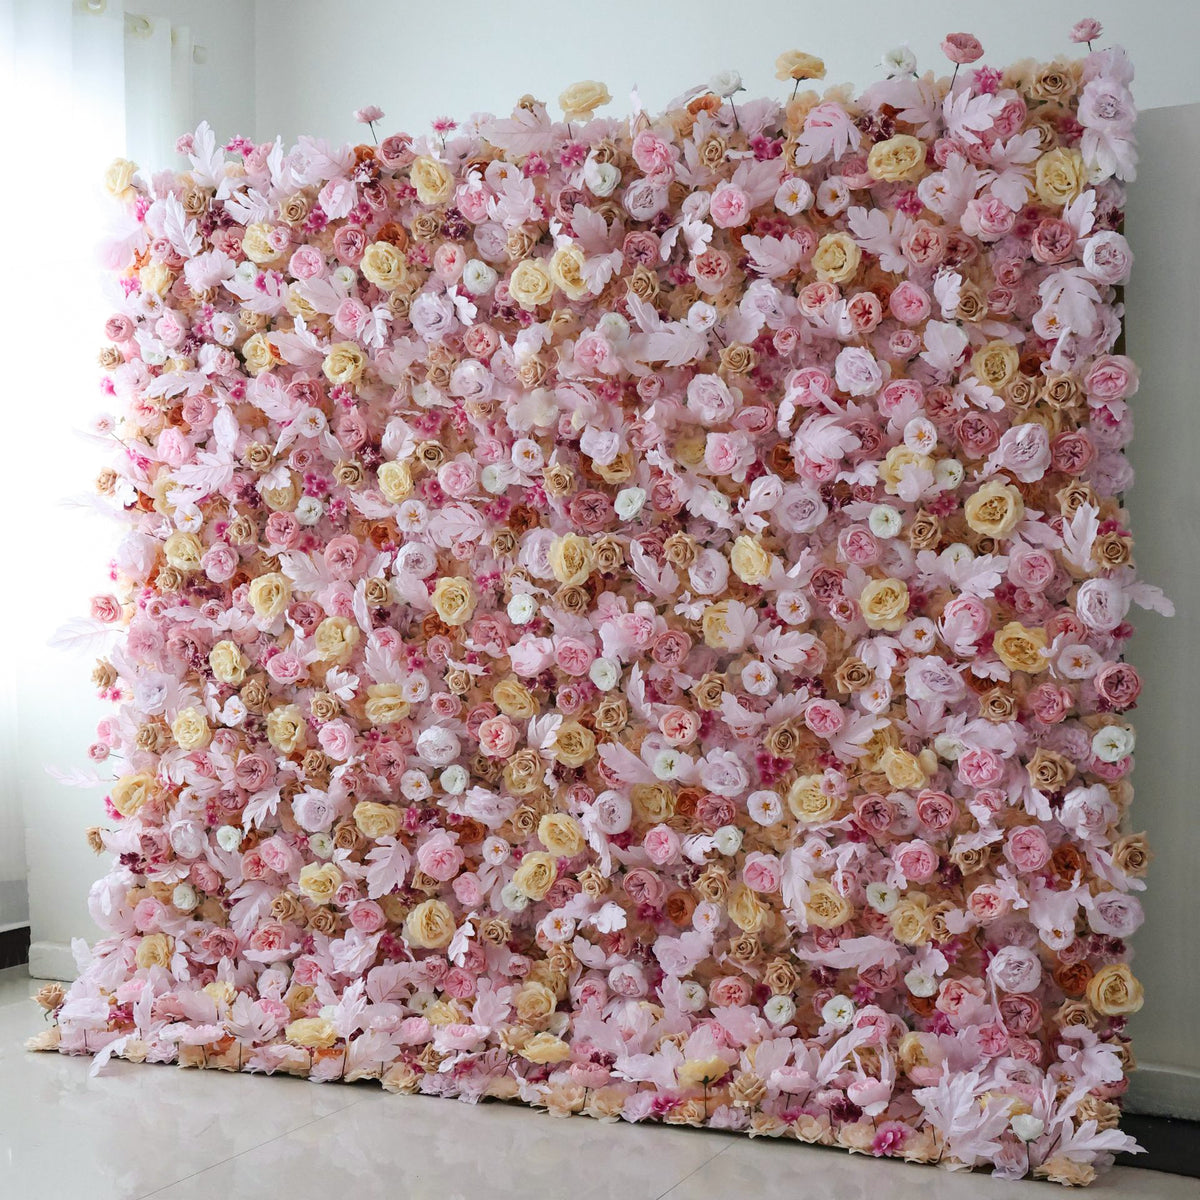 3D Artificial Flower Wall Arrangement Wedding Party Birthday Backdrop Decor HQ1330